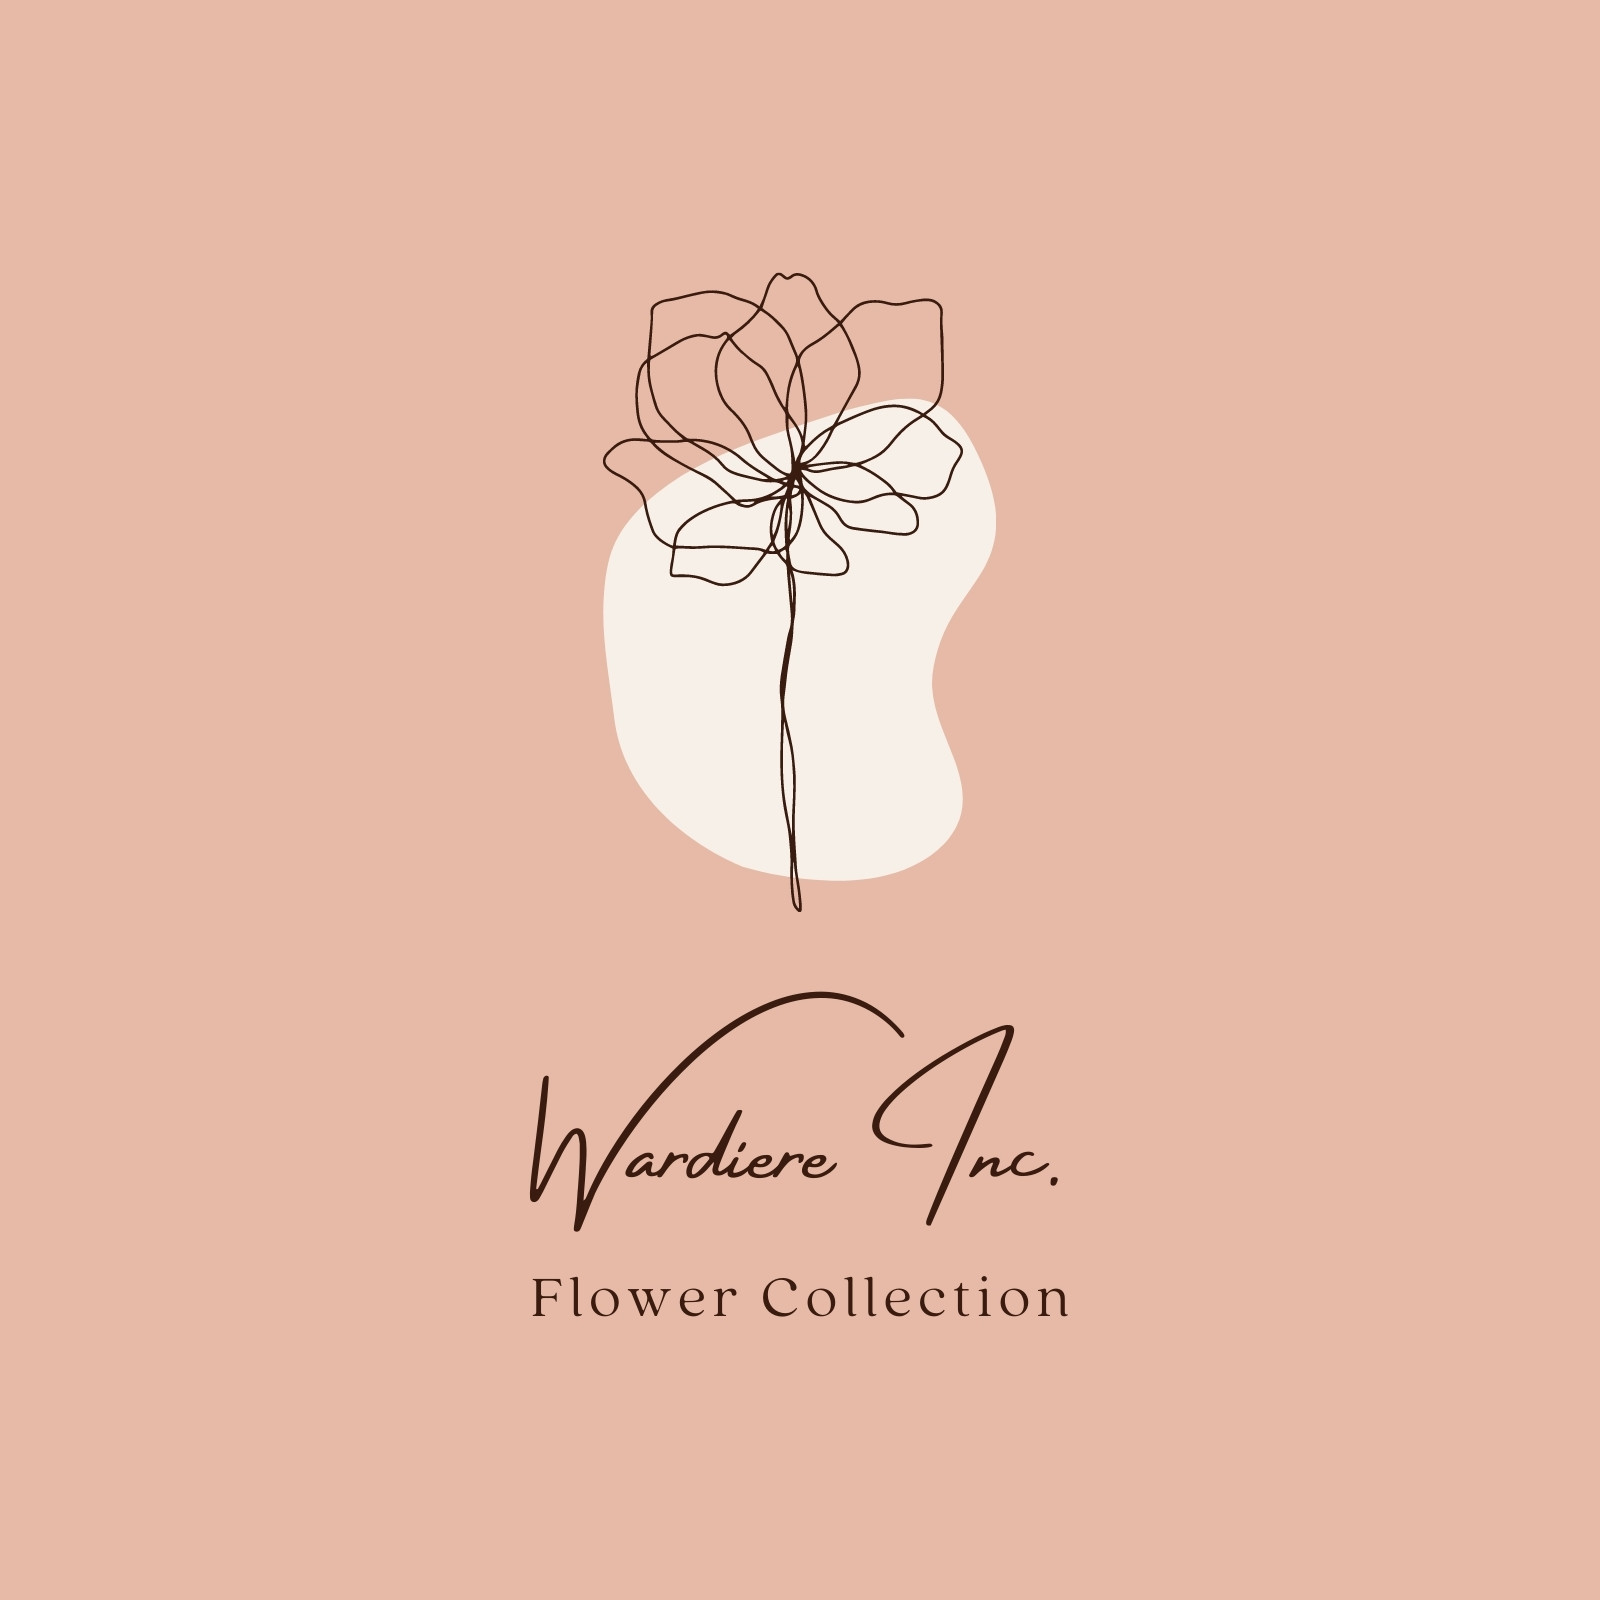 Customize 944+ Flower Shop Logo Templates Online - Canva